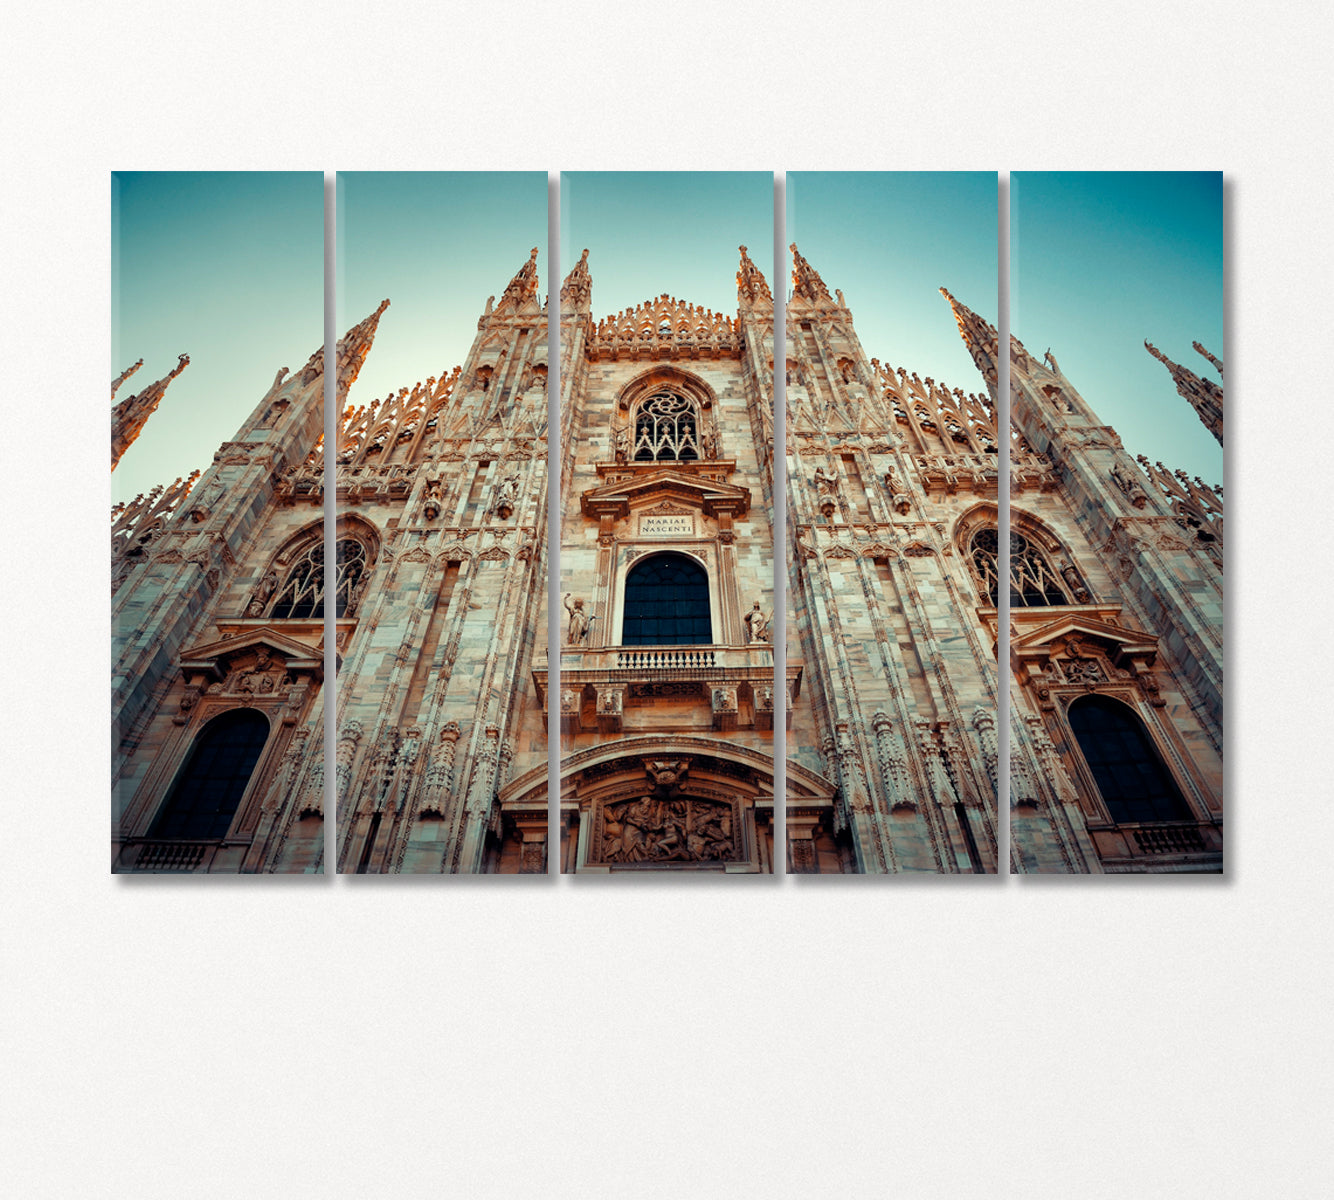 Splendor of Milan Cathedral Italy Canvas Print-Canvas Print-CetArt-5 Panels-36x24 inches-CetArt